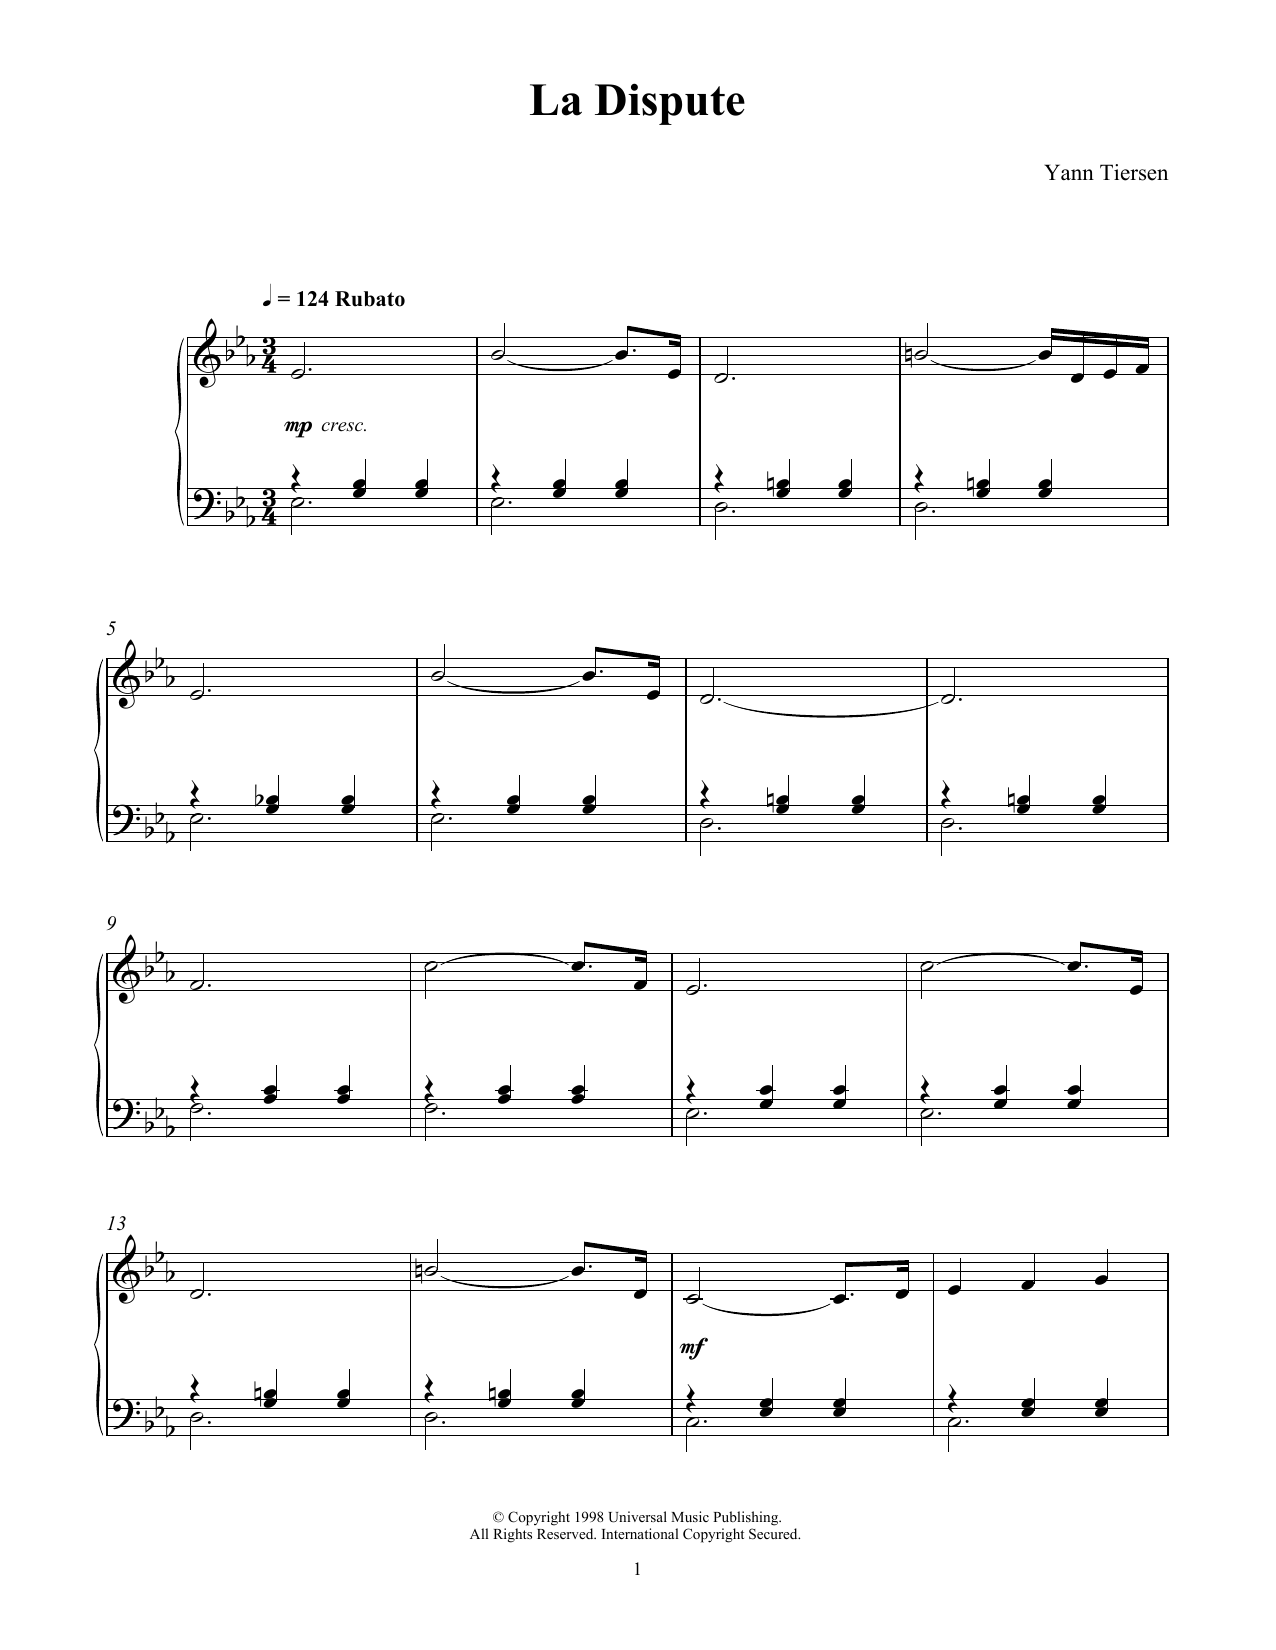 Yann Tiersen La Dispute Sheet Music Notes & Chords for Piano Solo - Download or Print PDF